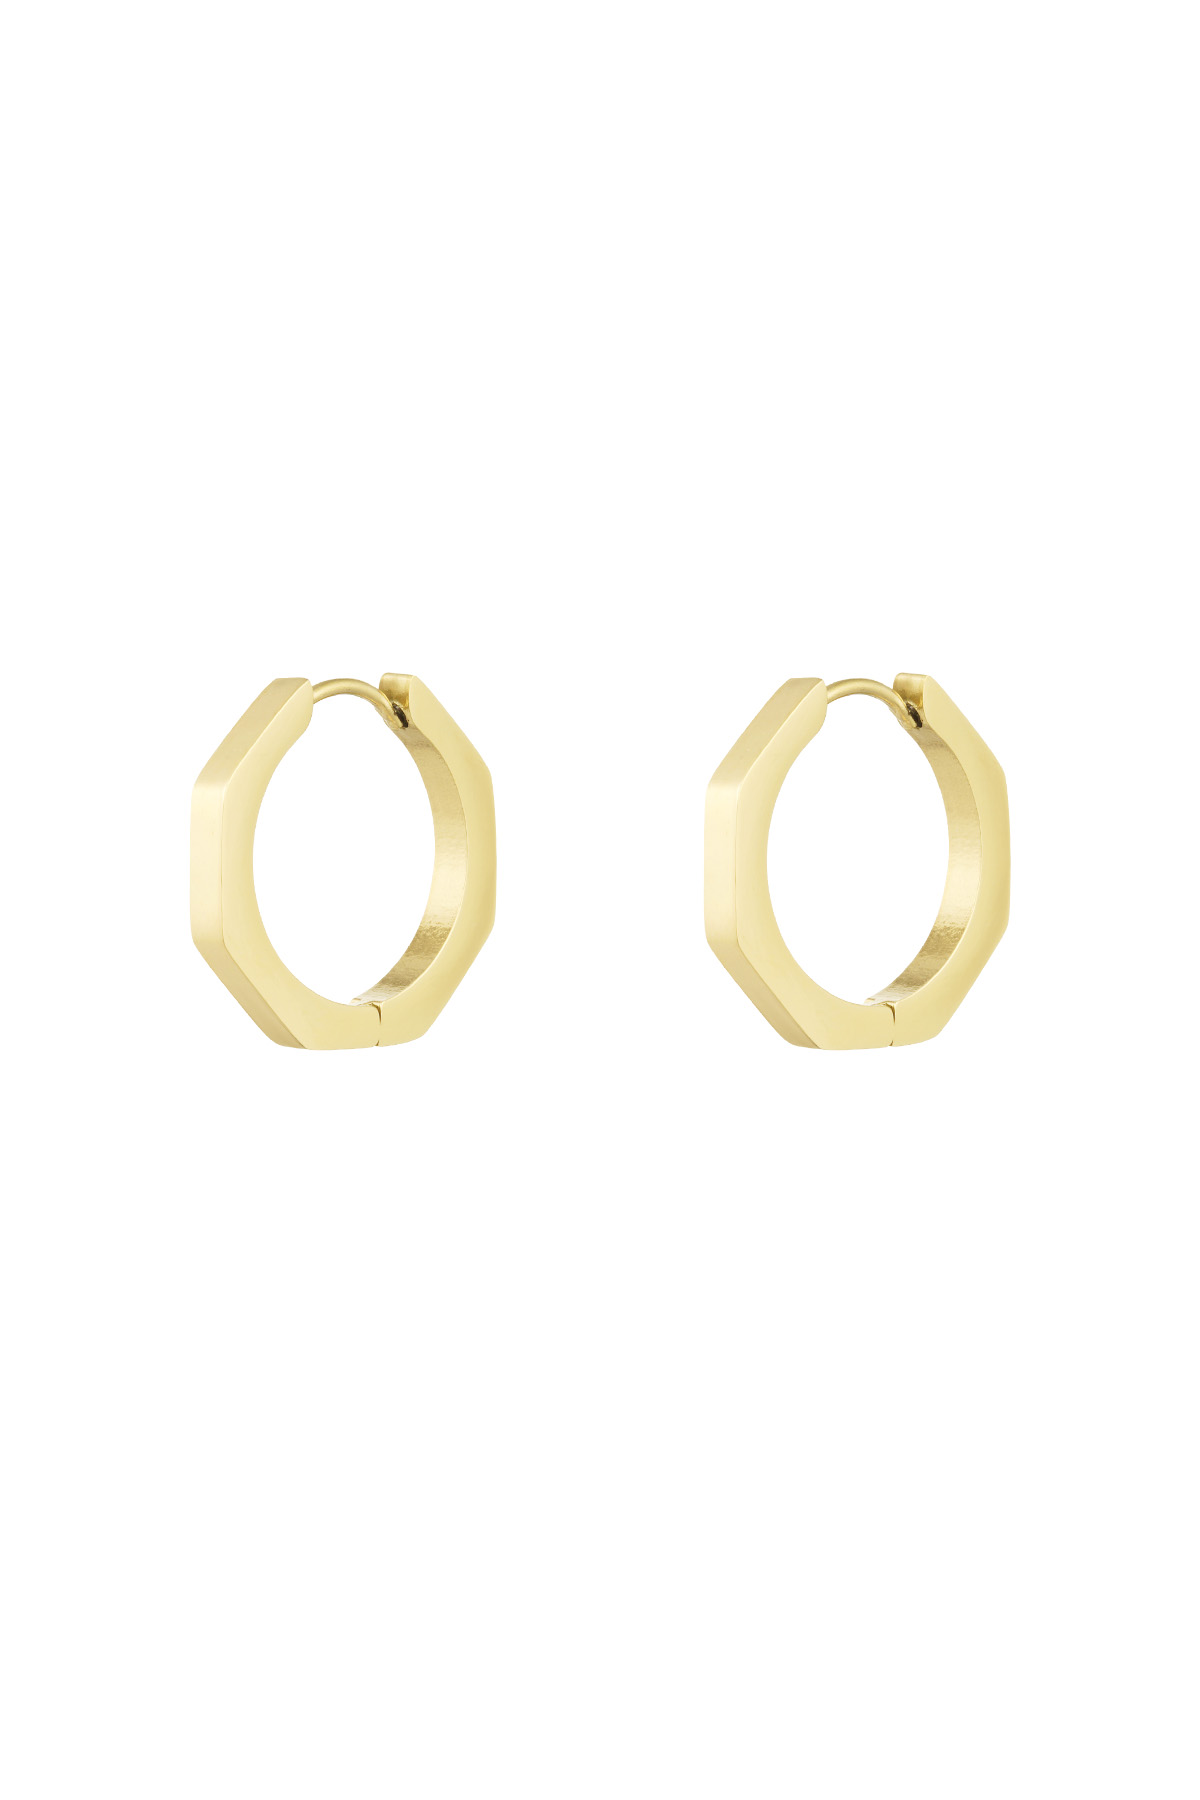 Klassische runde Ohrringe groß – Gold 